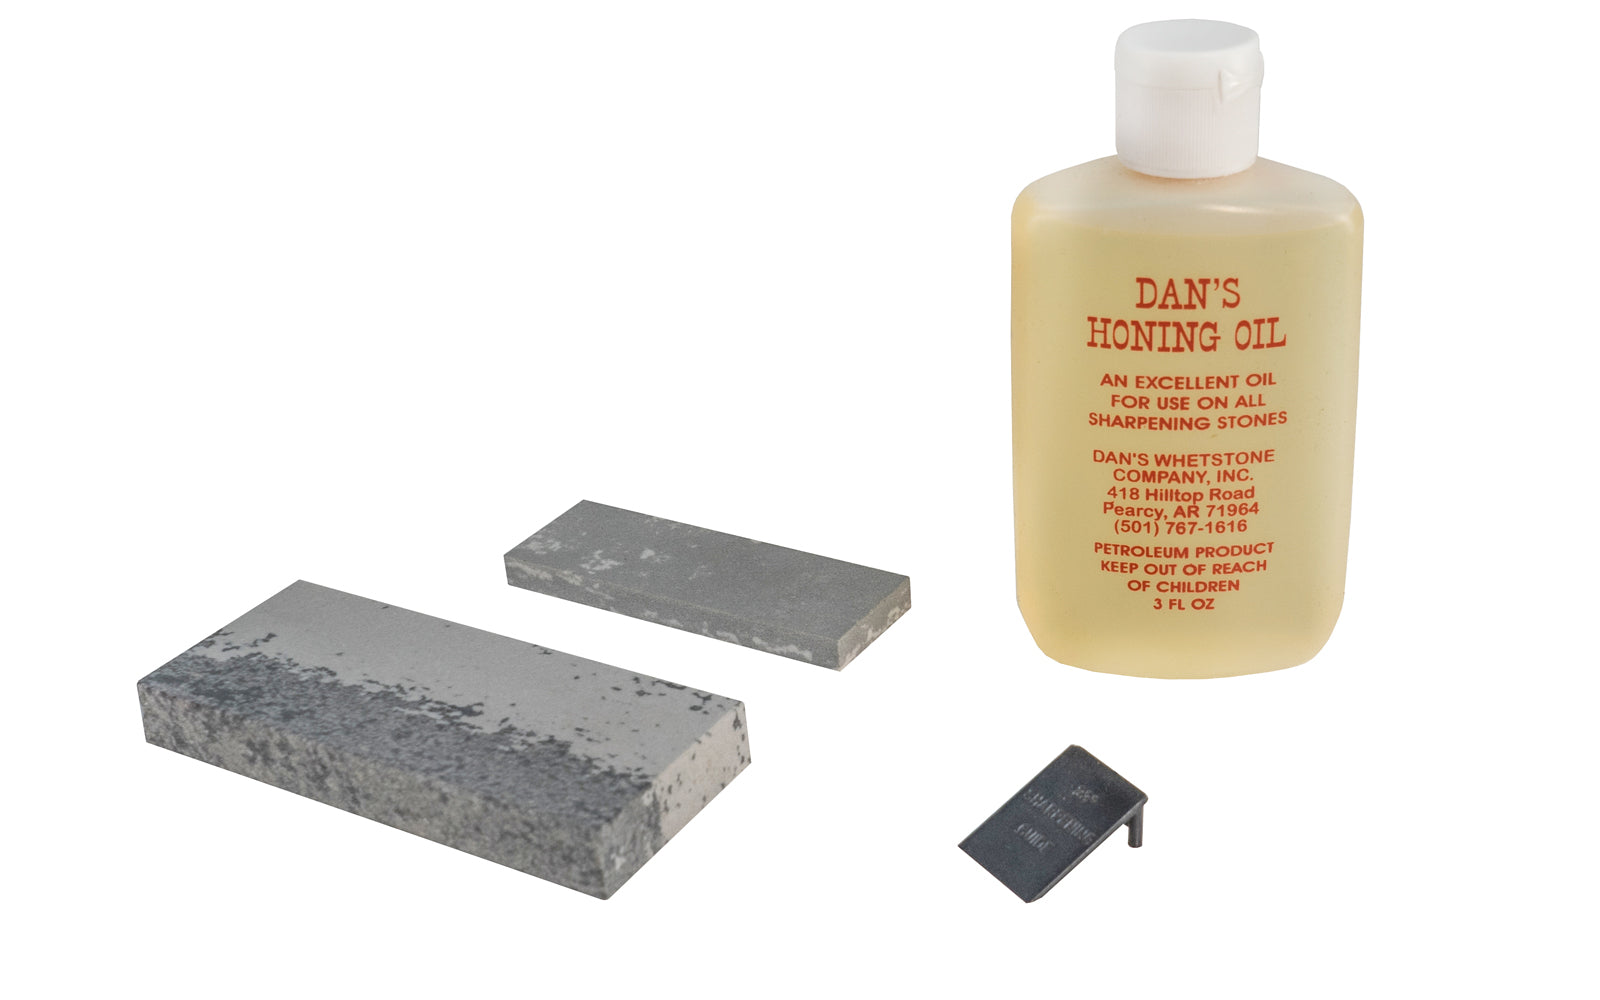 Hard & Soft Arkansas Stone Sharpening Kit with Oil - Box Kit - Made in USA - Model No. HK